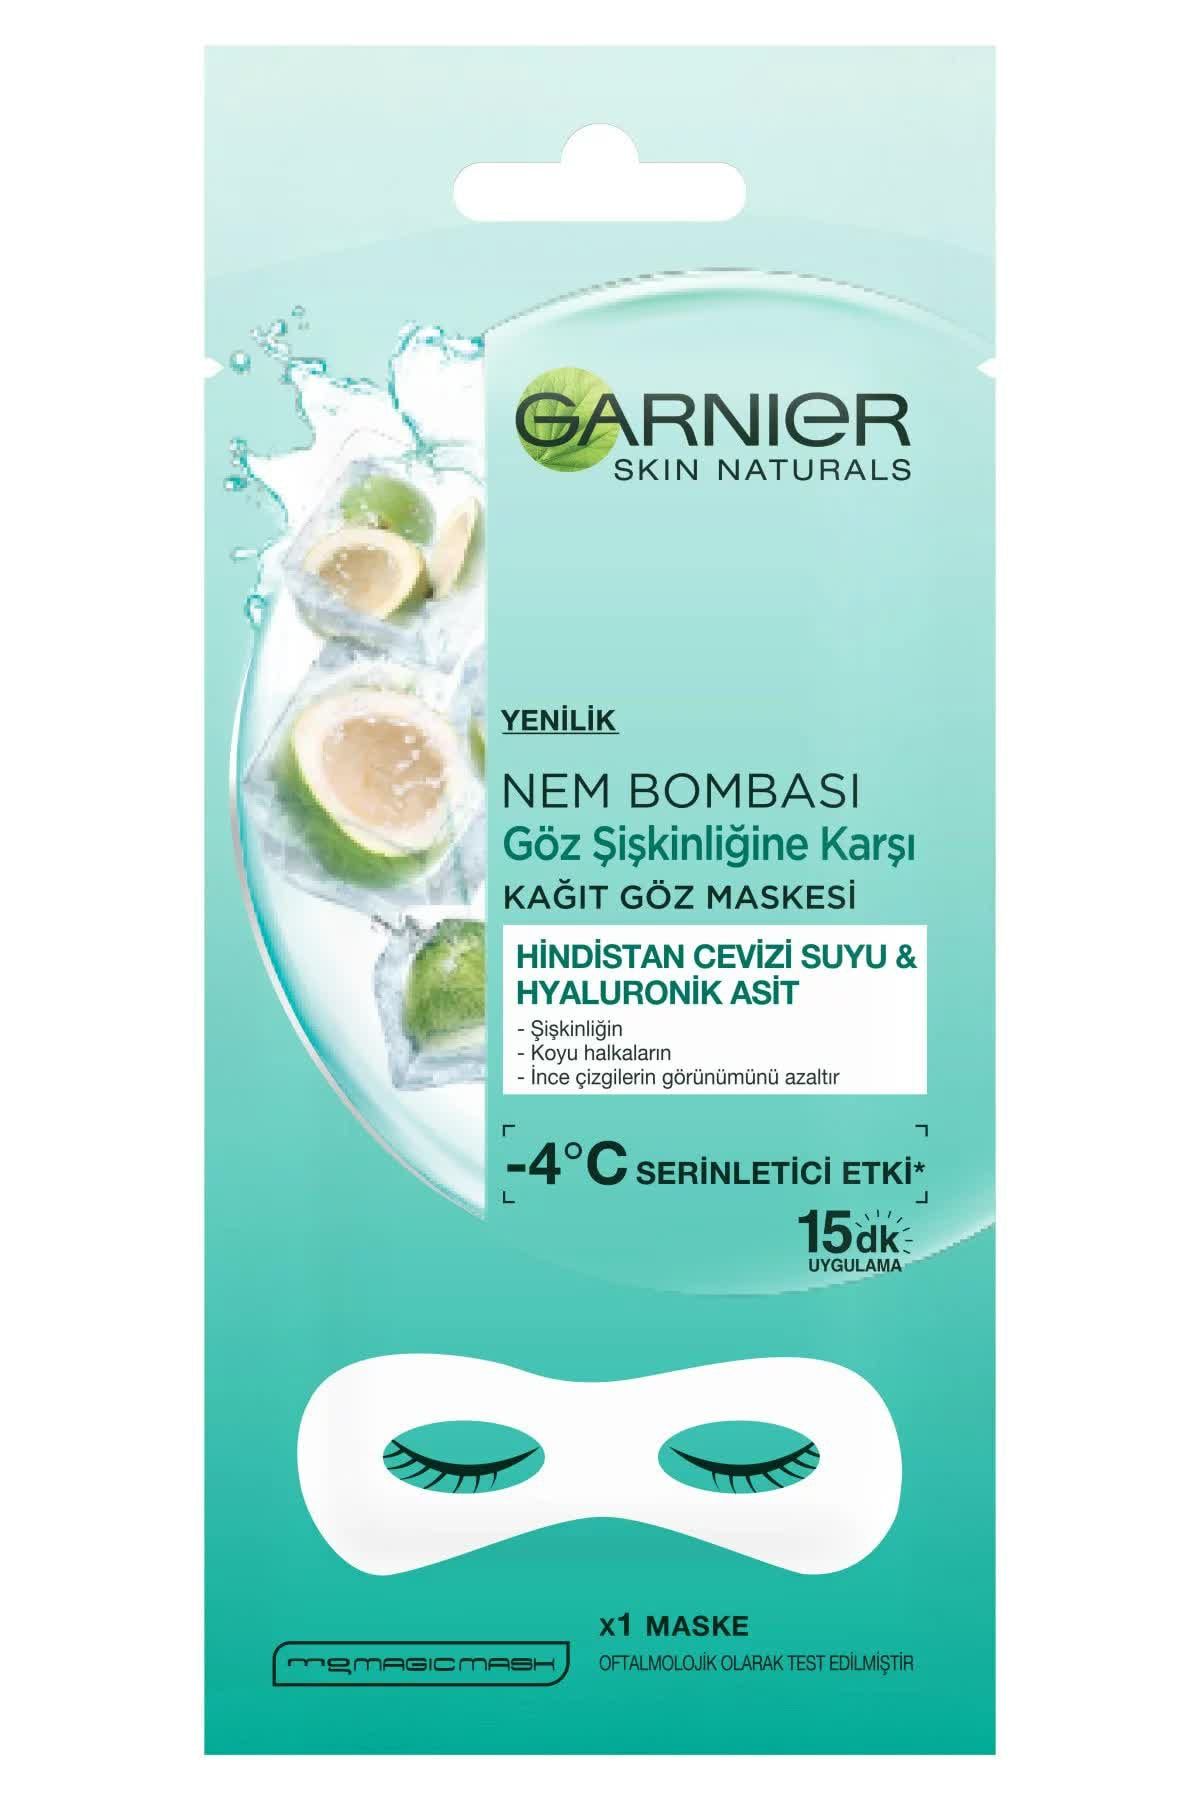 Garnier Göz Altı Torbalarına Karşı Kağıt Göz Maskesi Hindistan Cevizi Suyu 3600542154796